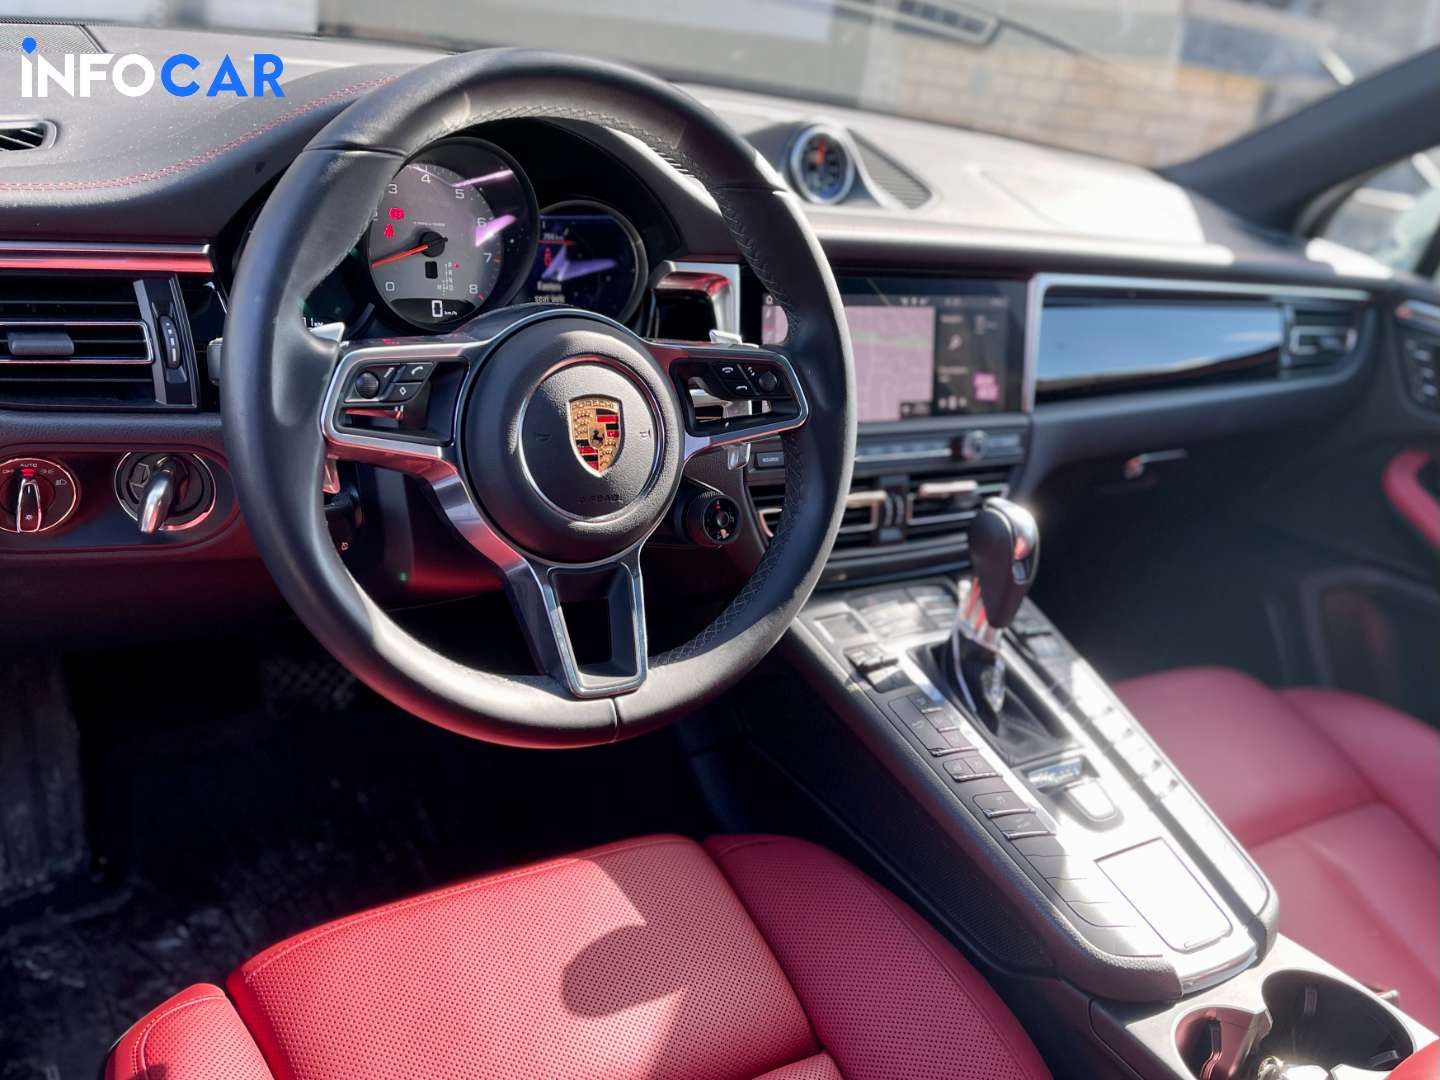 2020 Porsche Macan s - INFOCAR - Toronto Auto Trading Platform